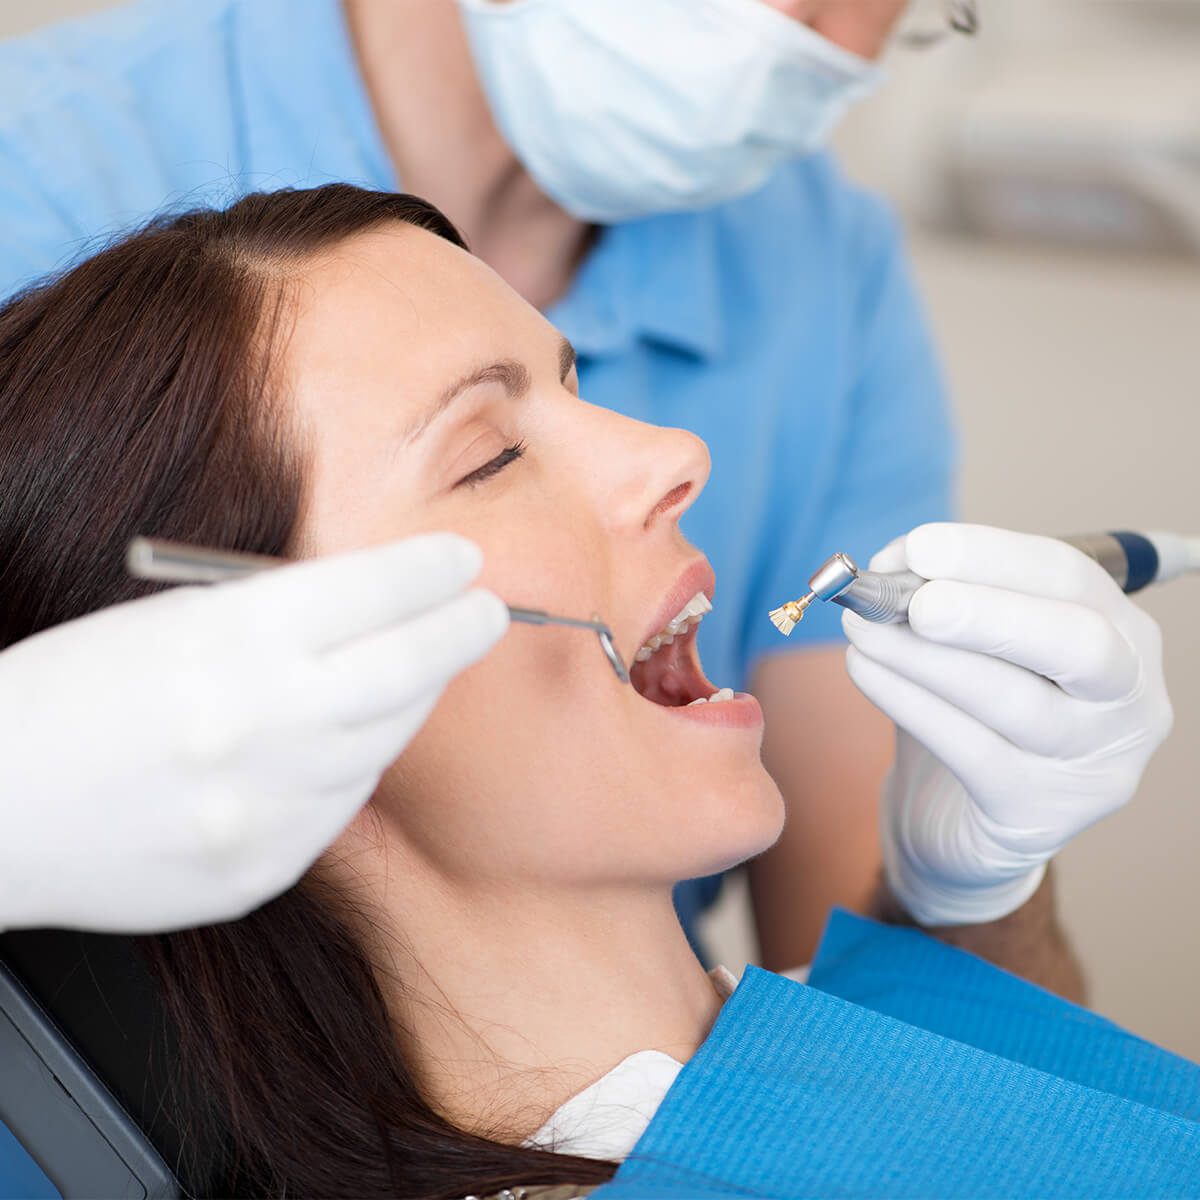 Sedation Dentistry FAQs in San Antonio TX Area